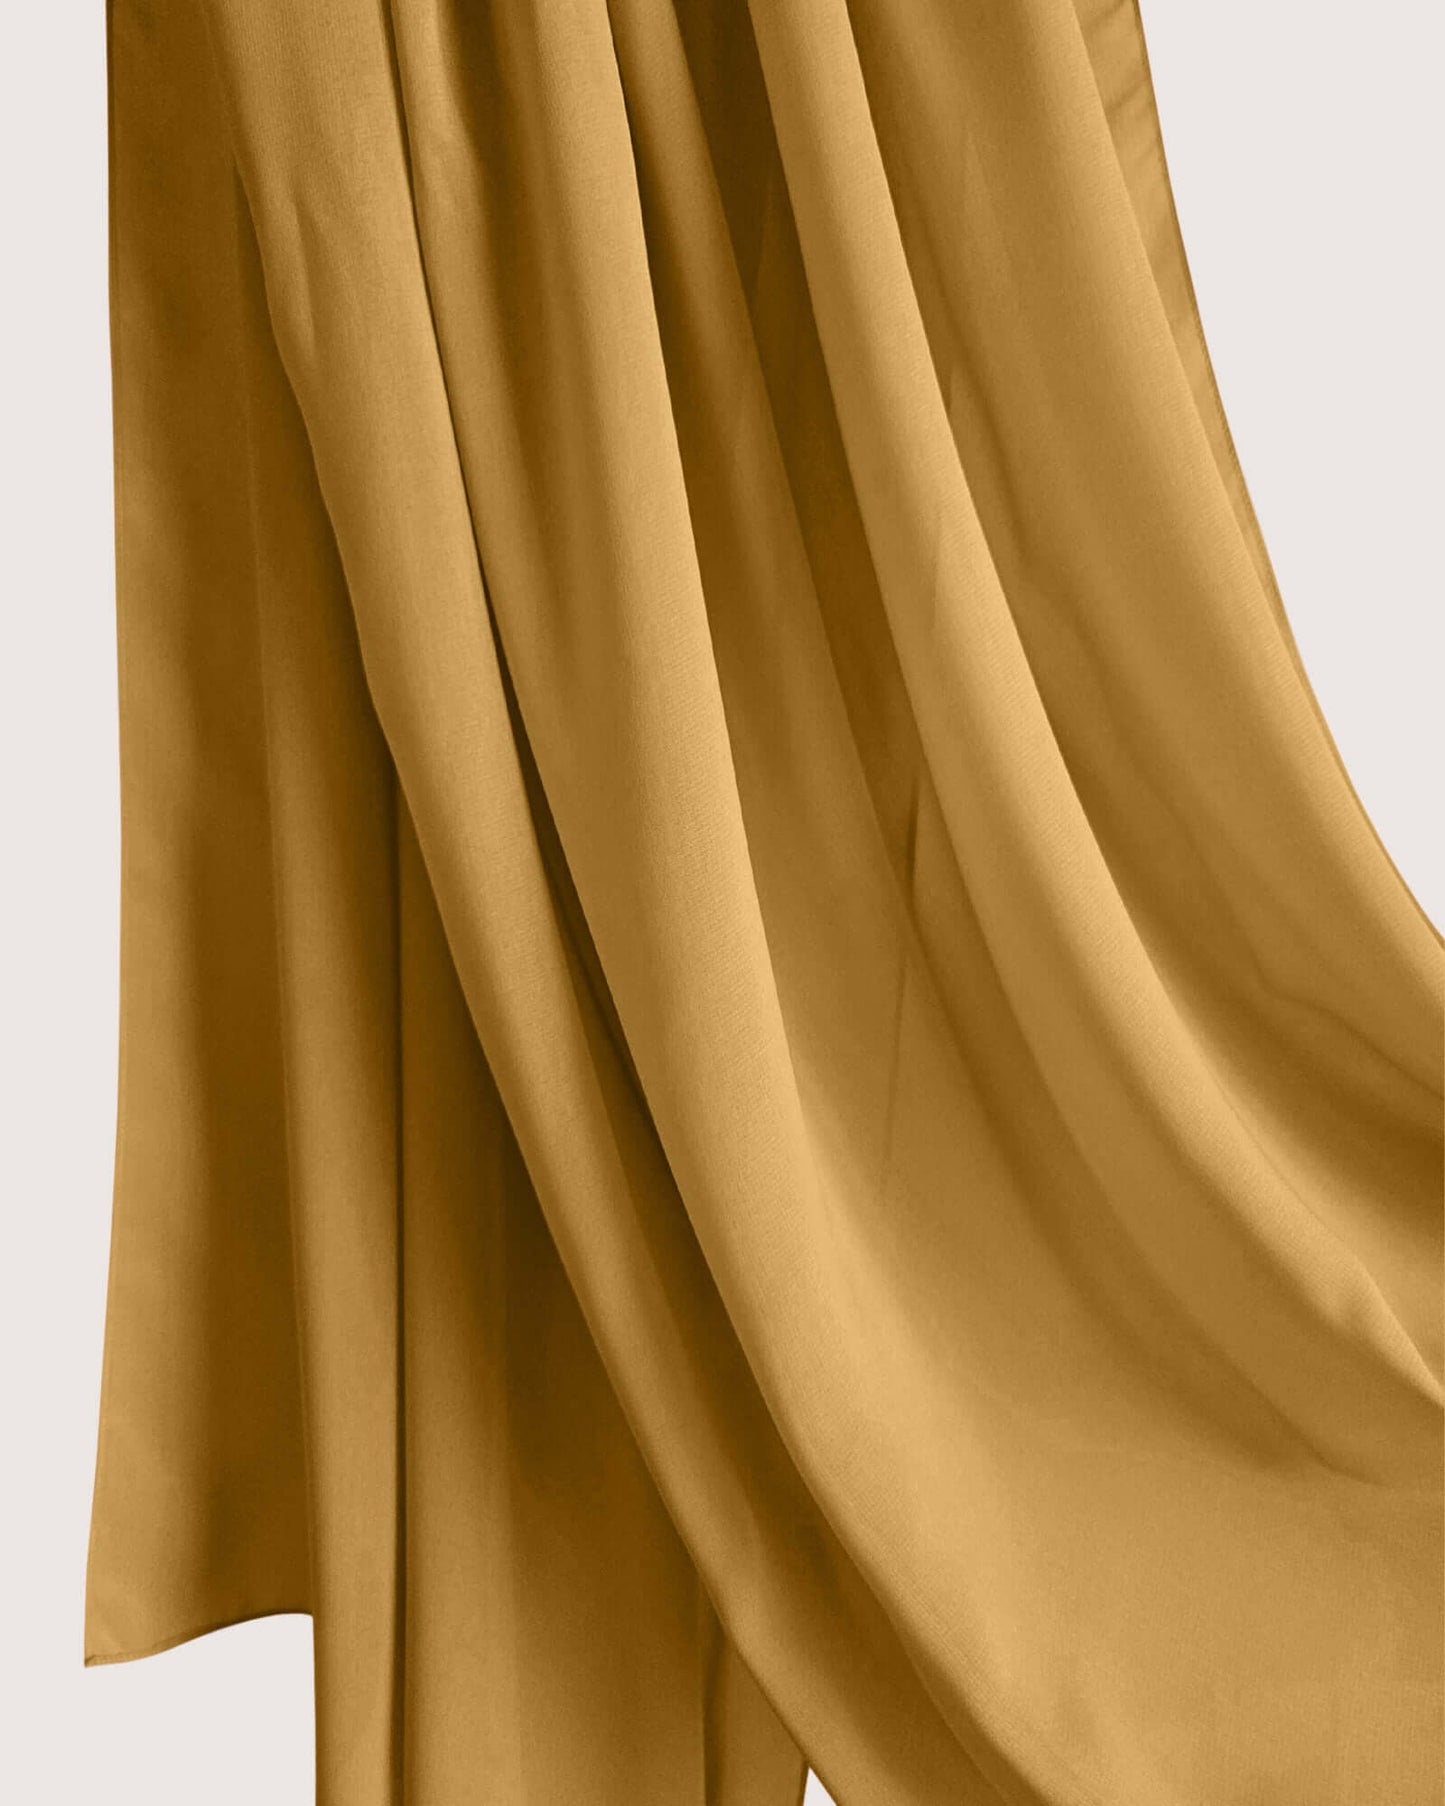 Premium Mustard Chiffon Hijab Scarf